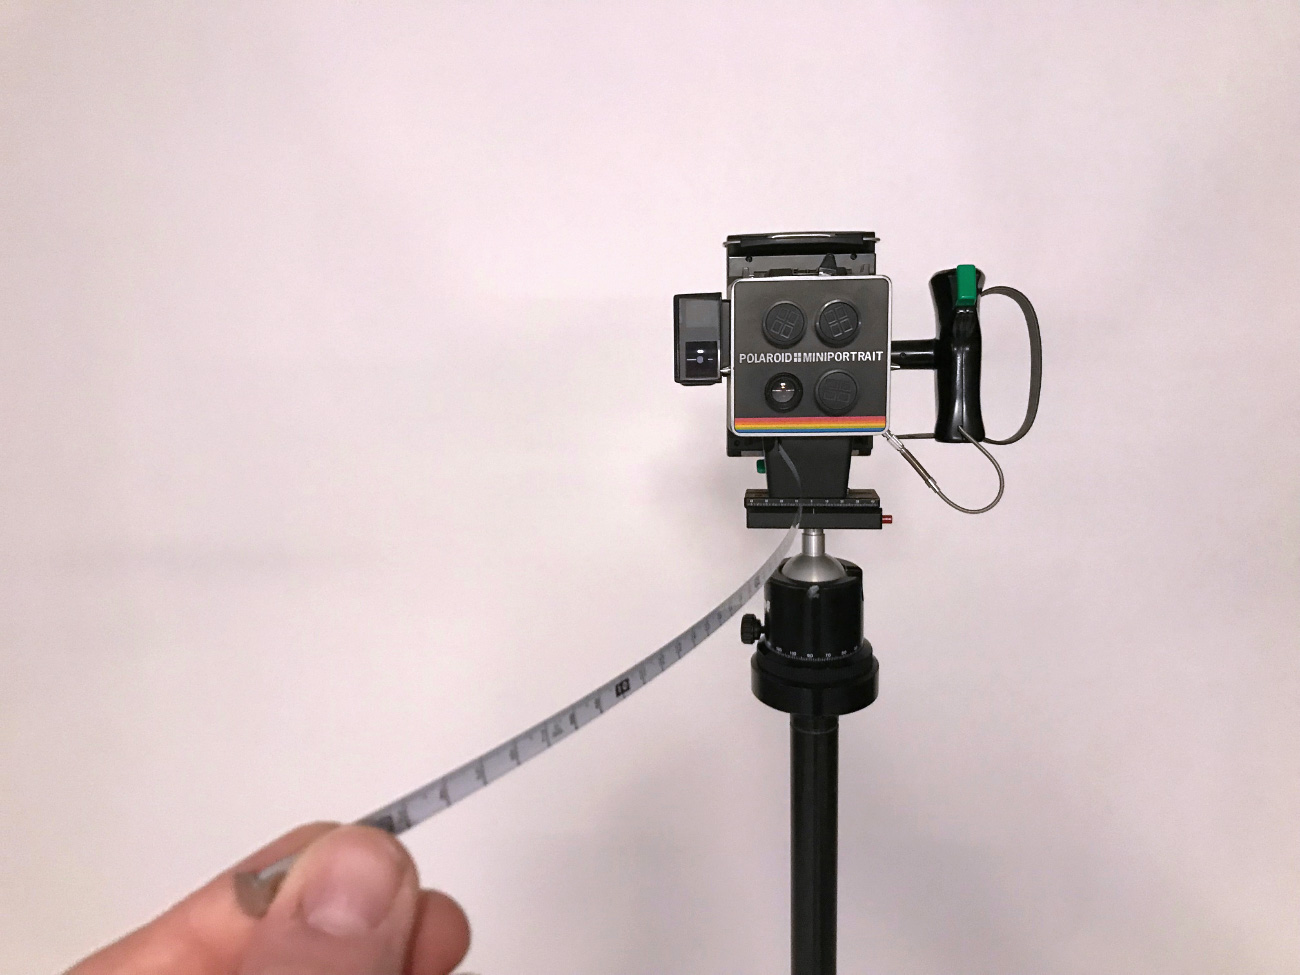 Polaroid Miniportrait - integrated tape measure!